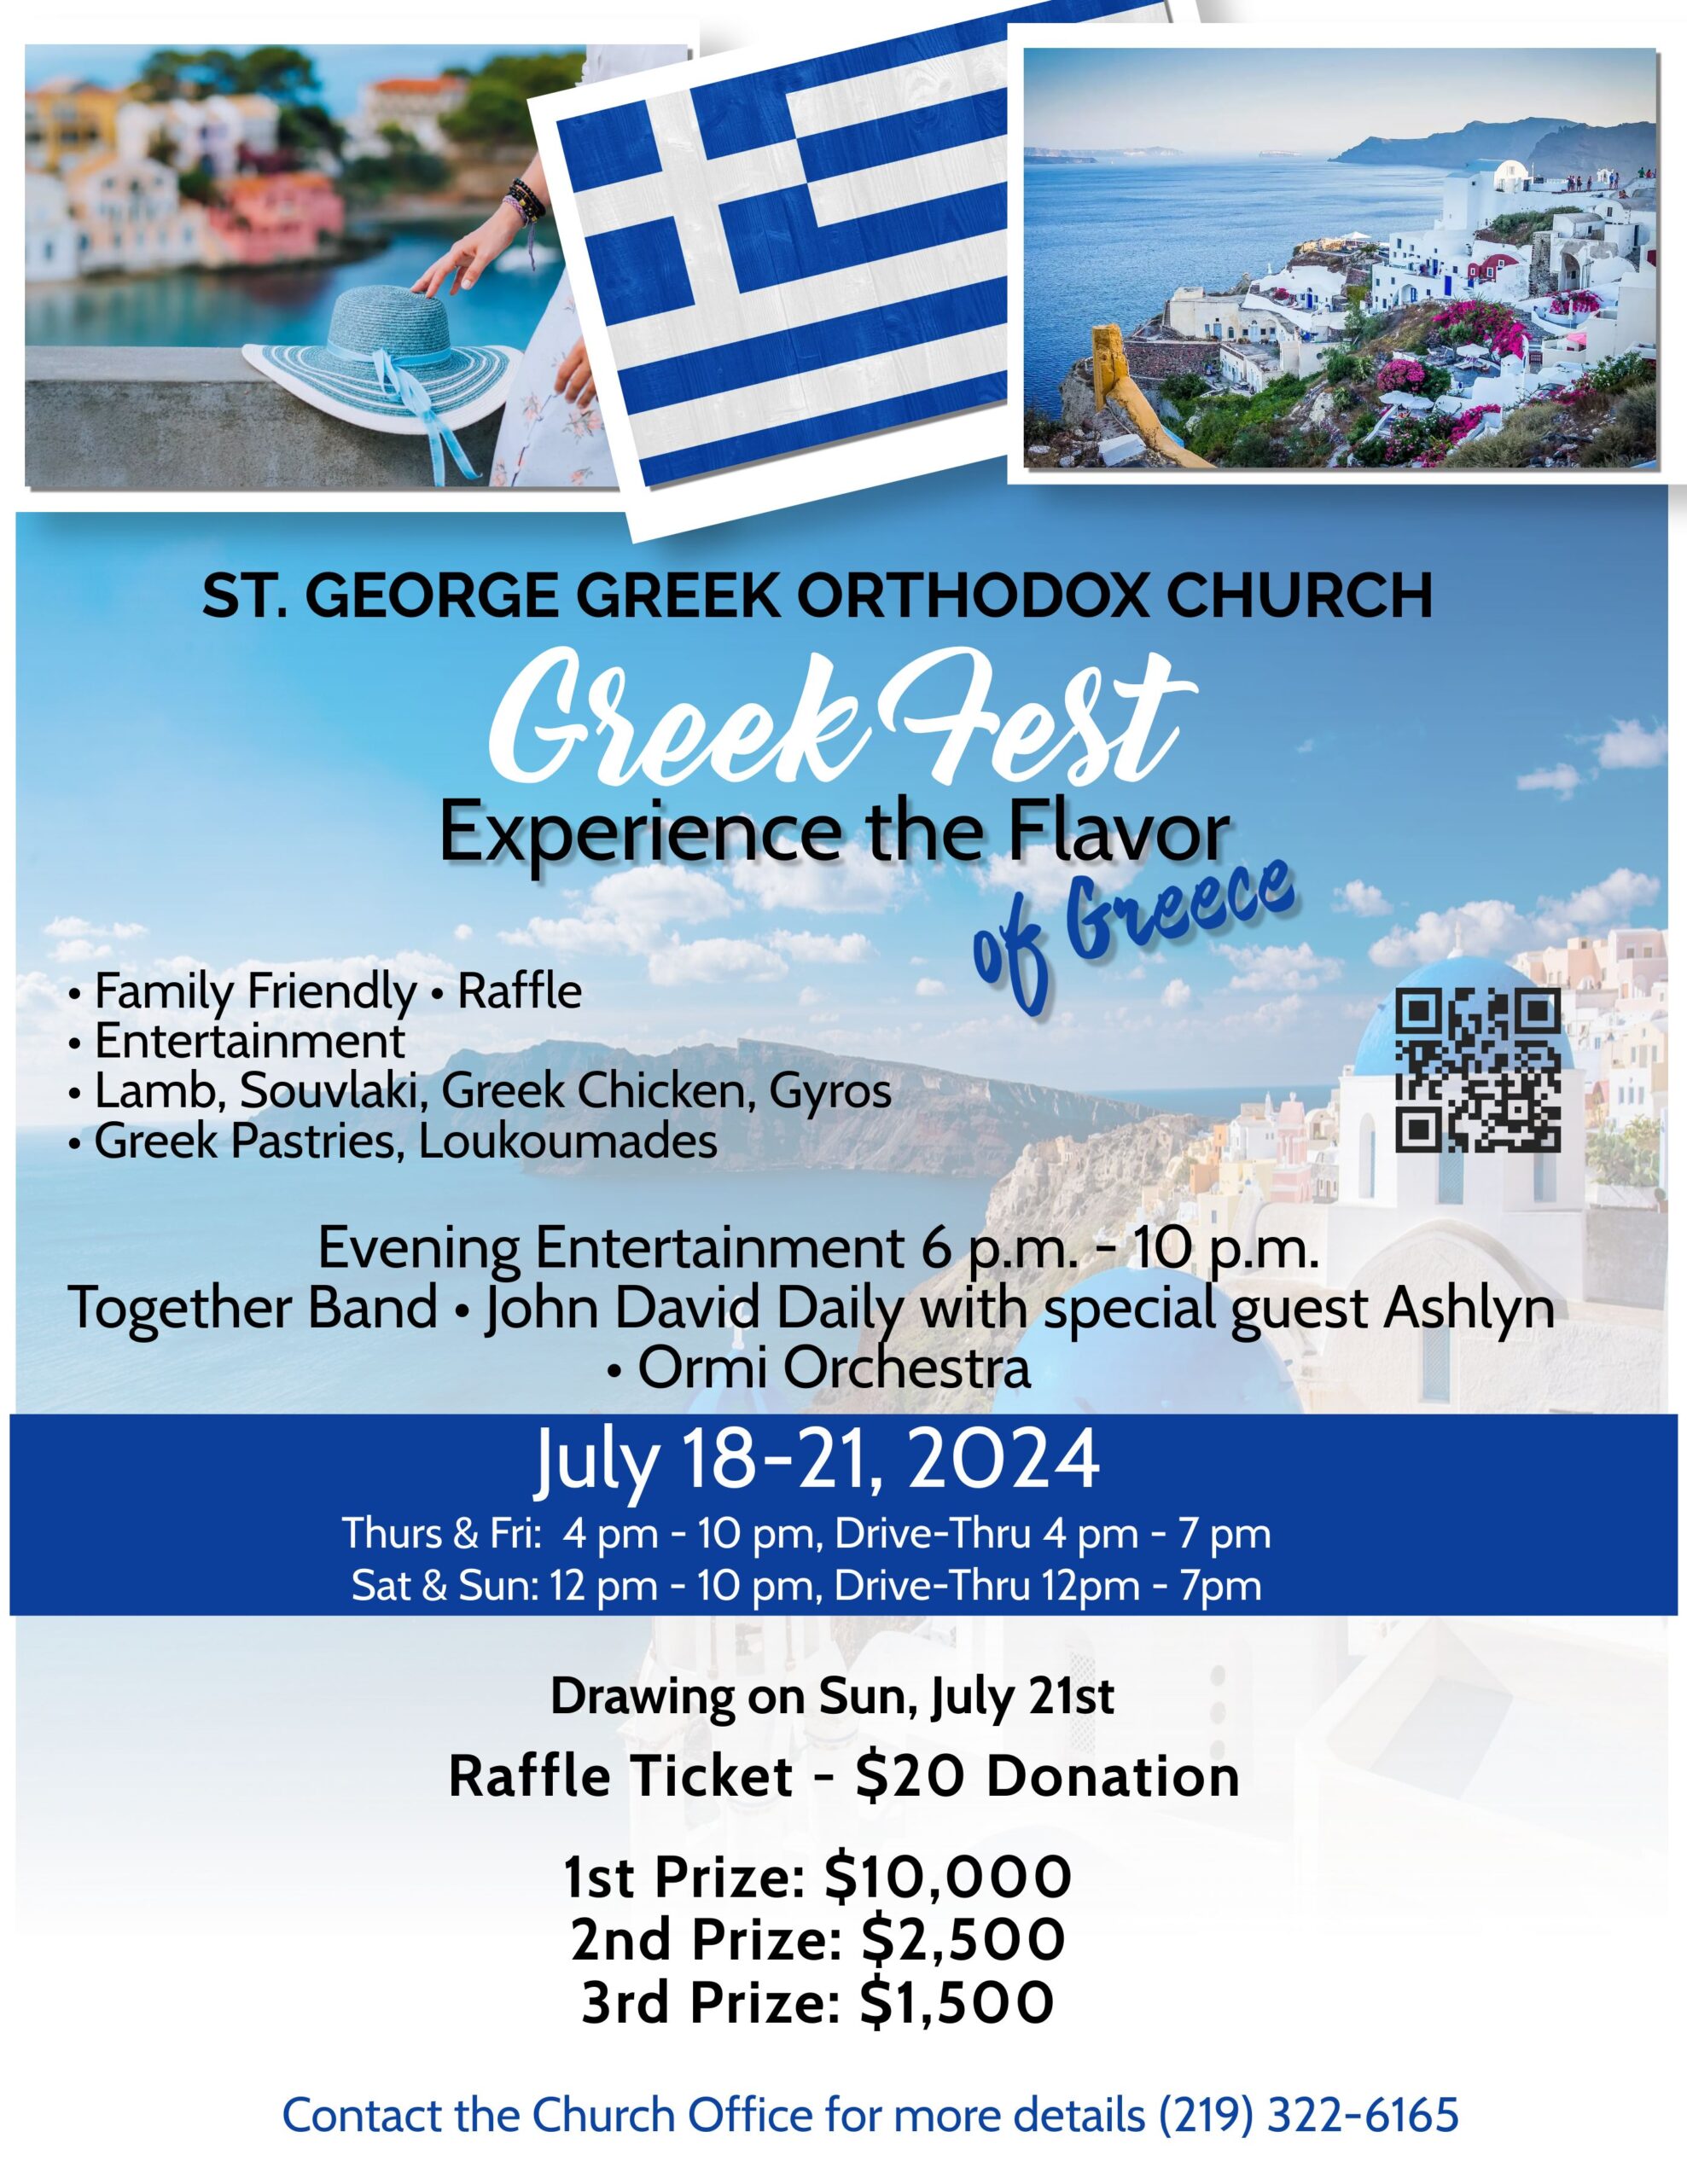 St. George Greek Orthodox Church Greek Fest - The Greek Orthodox 